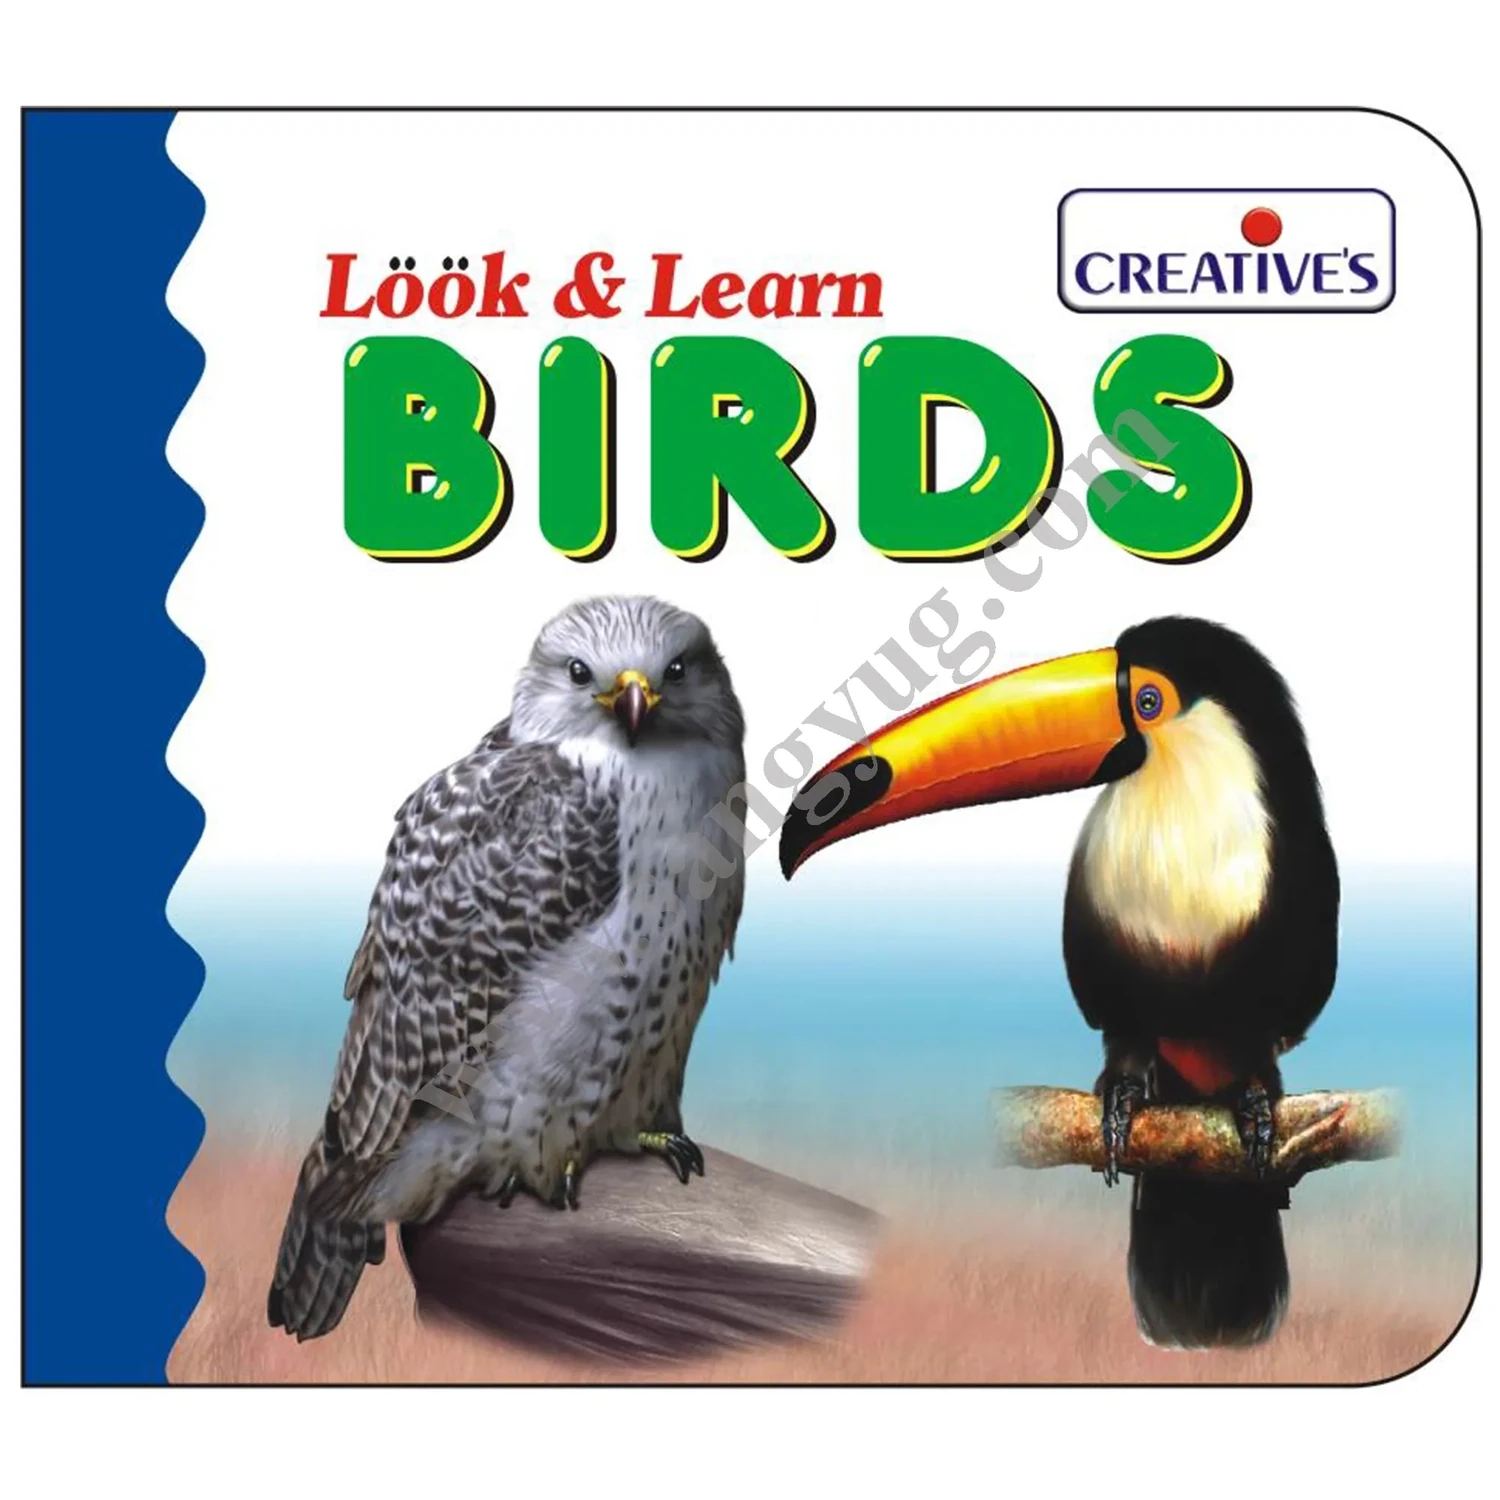 Creative look & learn board book - BIRDS 525